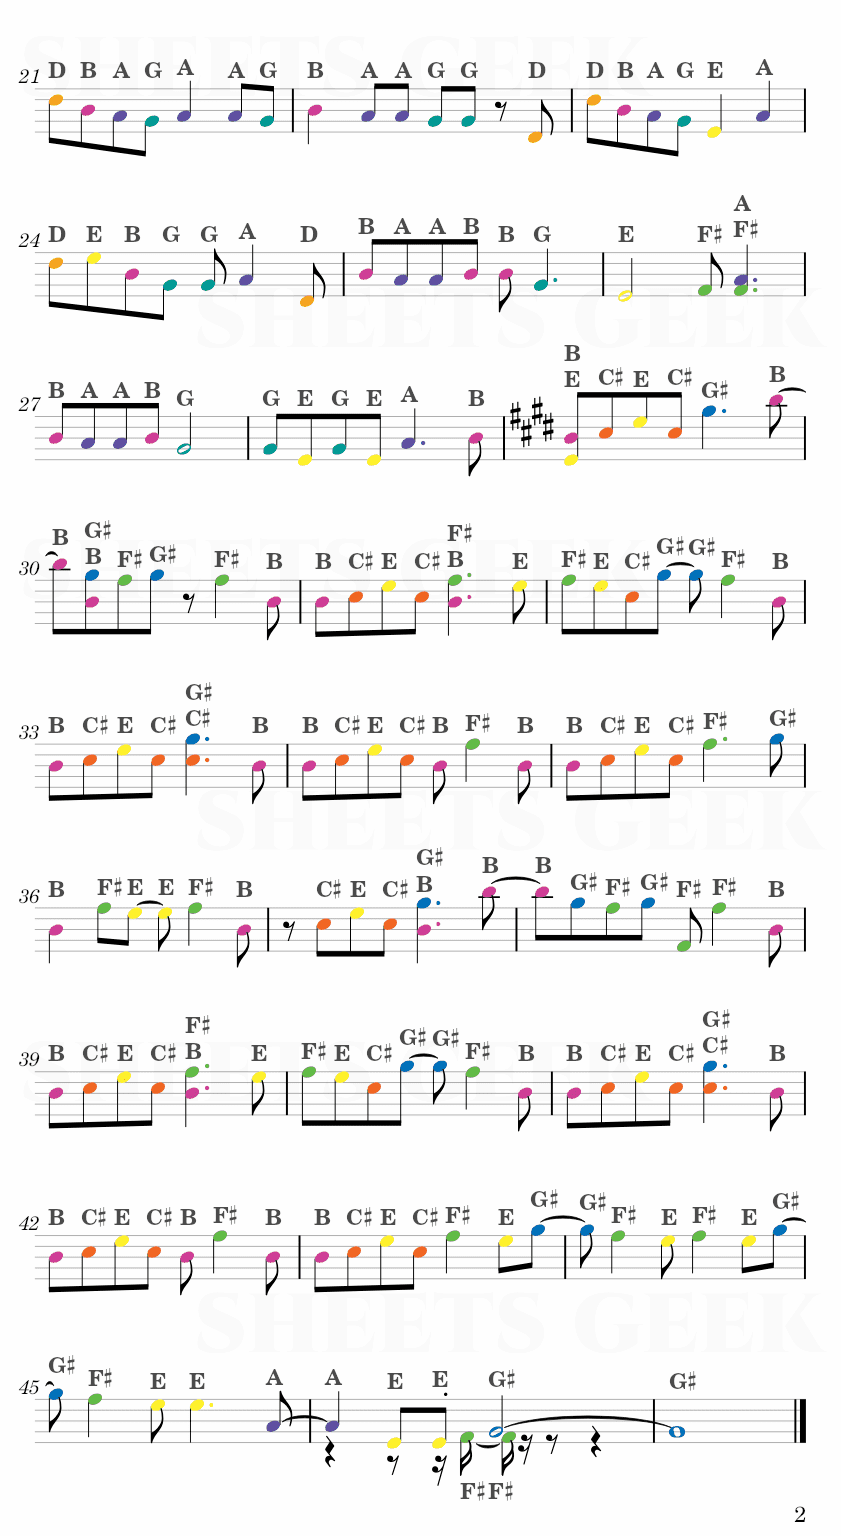 Bluestone Alley - Congfei Wei (Piano Tiles 2) Easy Sheet Music Free for piano, keyboard, flute, violin, sax, cello page 2